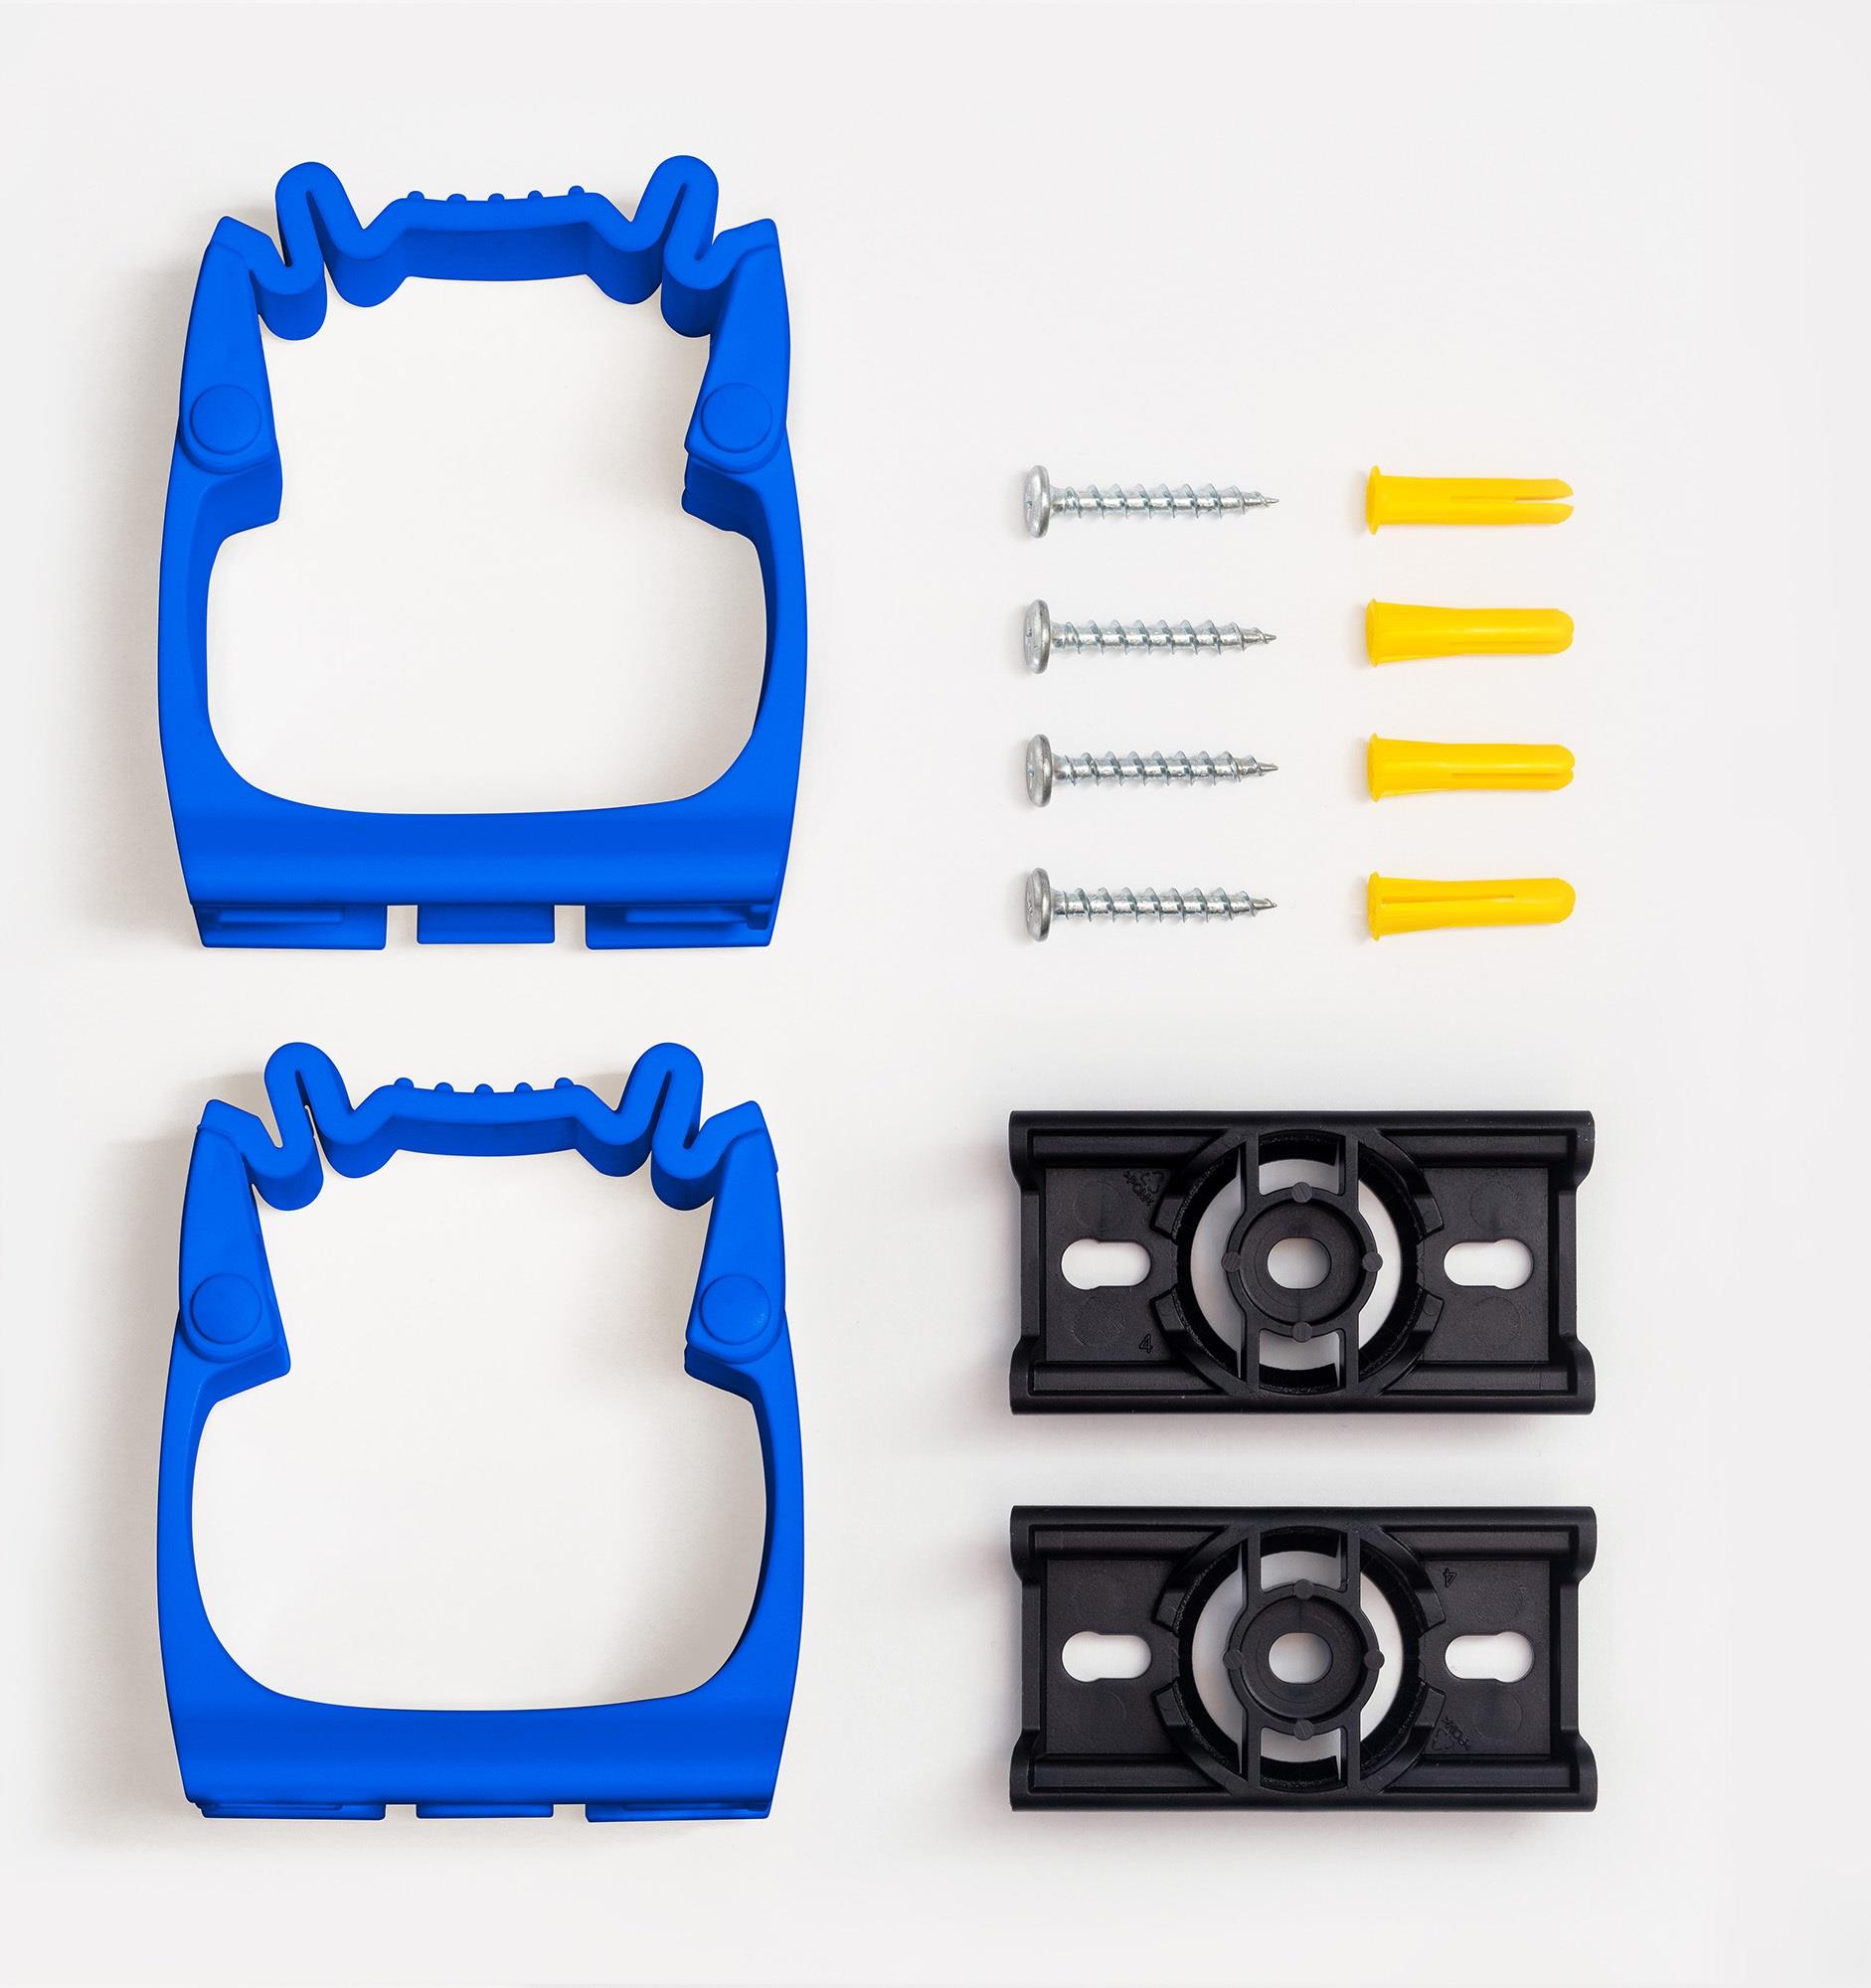 Toolflex One Halter 15-35 mm in blau im 2er-Pack inkl. Toolflex One Adapter in schwarz